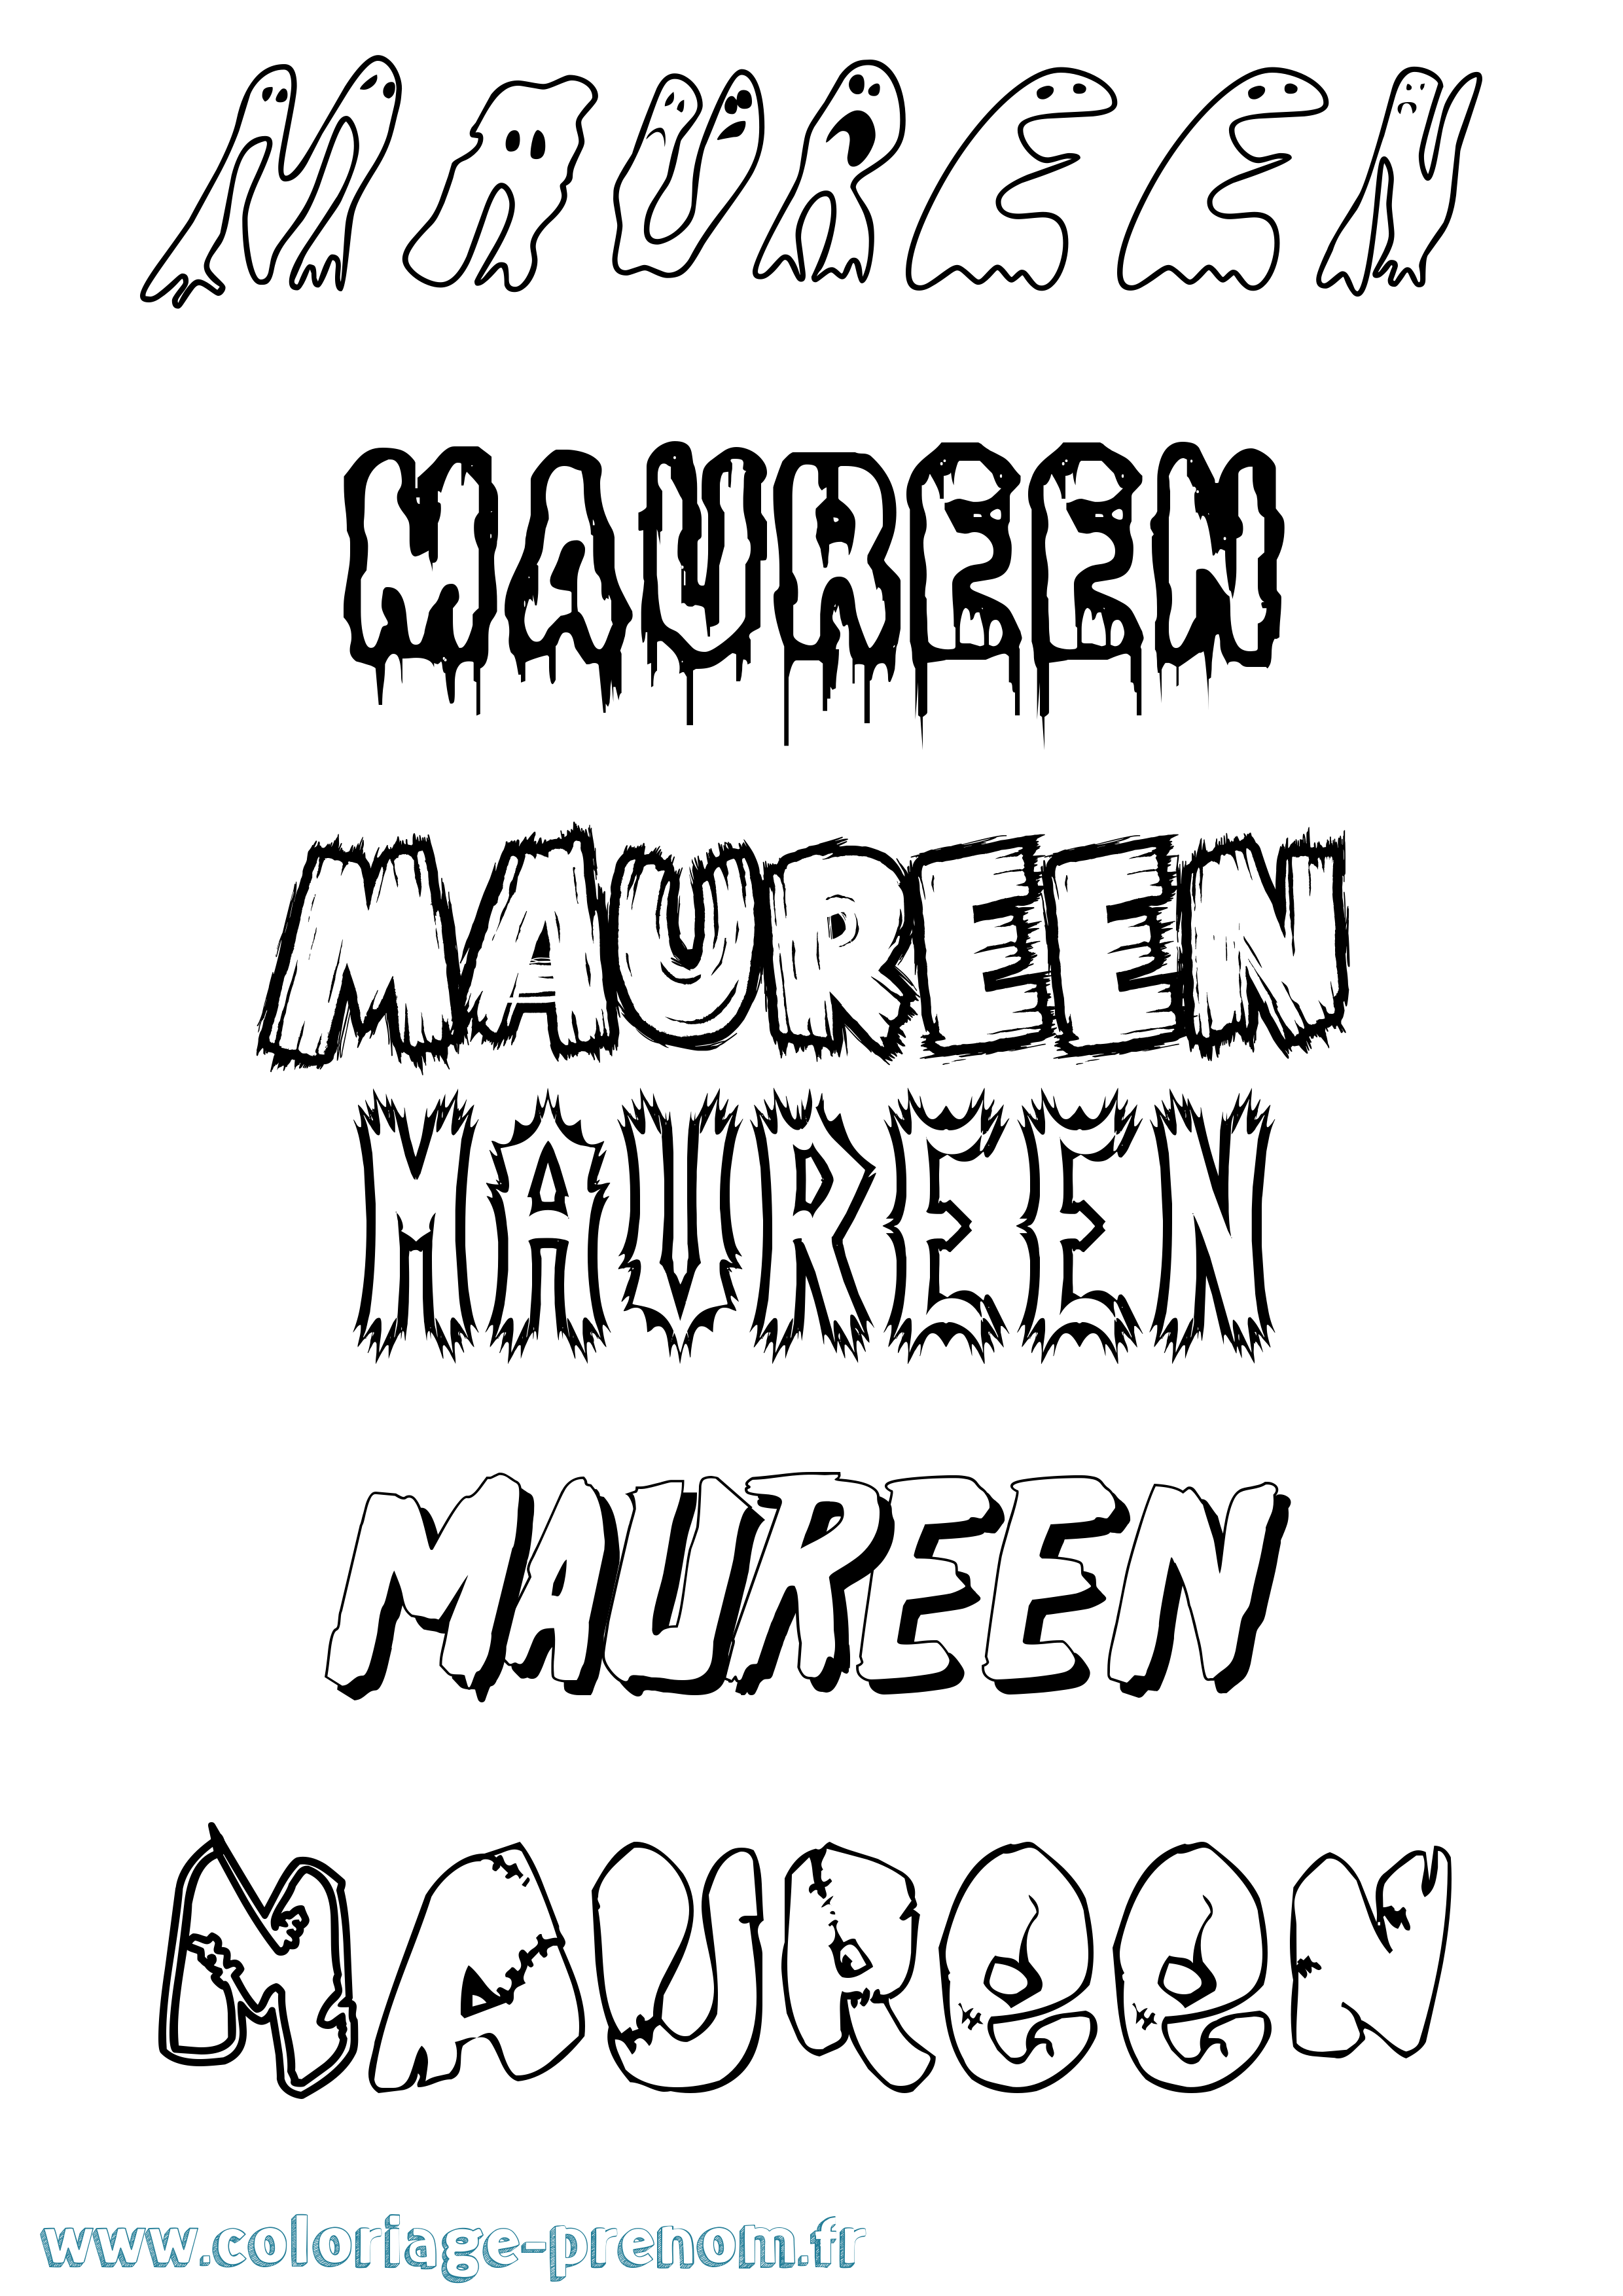 Coloriage prénom Maureen